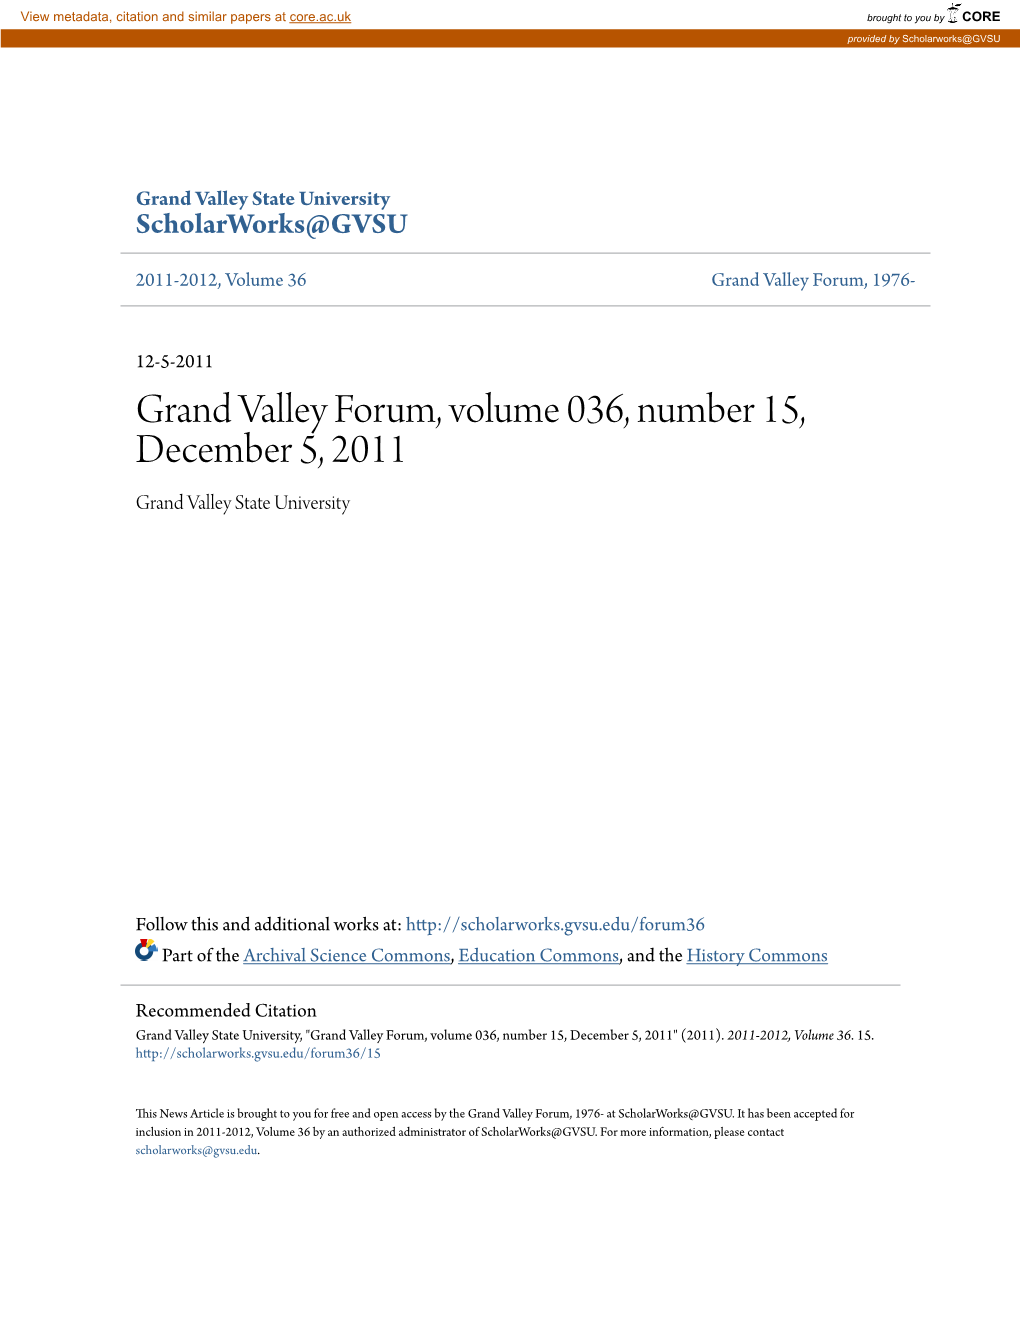 Grand Valley Forum, Volume 036, Number 15, December 5, 2011 Grand Valley State University